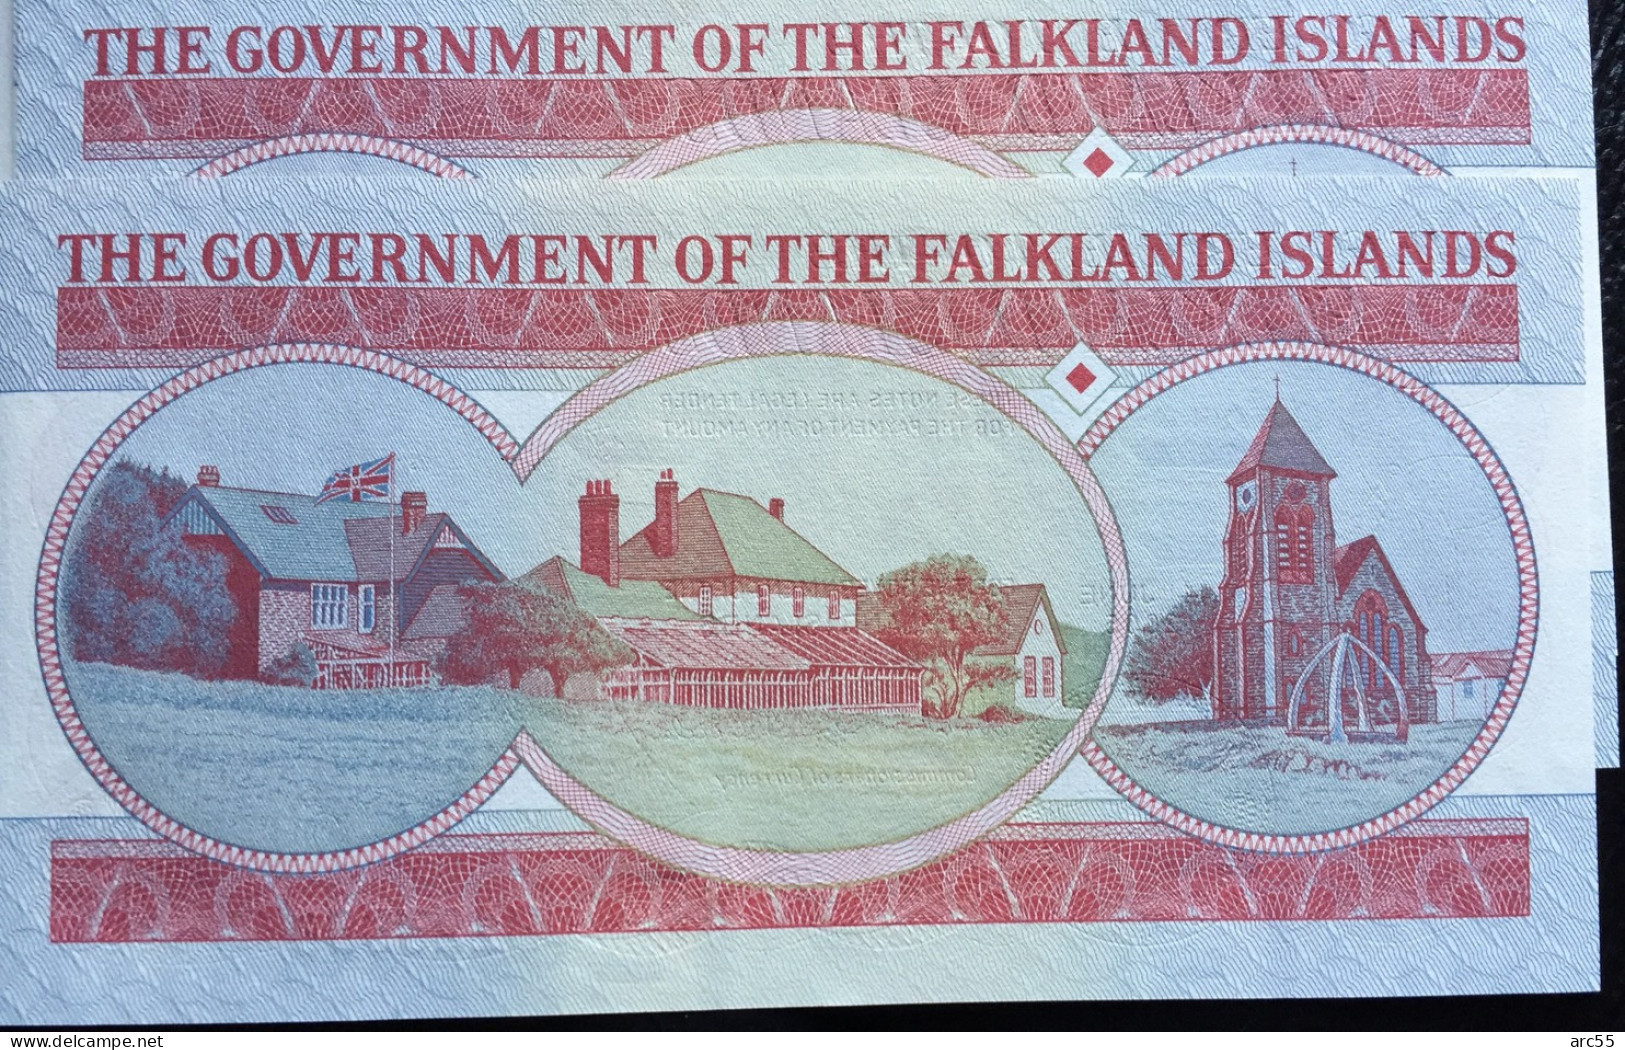 Falkland Islands £5 Pound 2005 Banknote UNC - 5 Pond